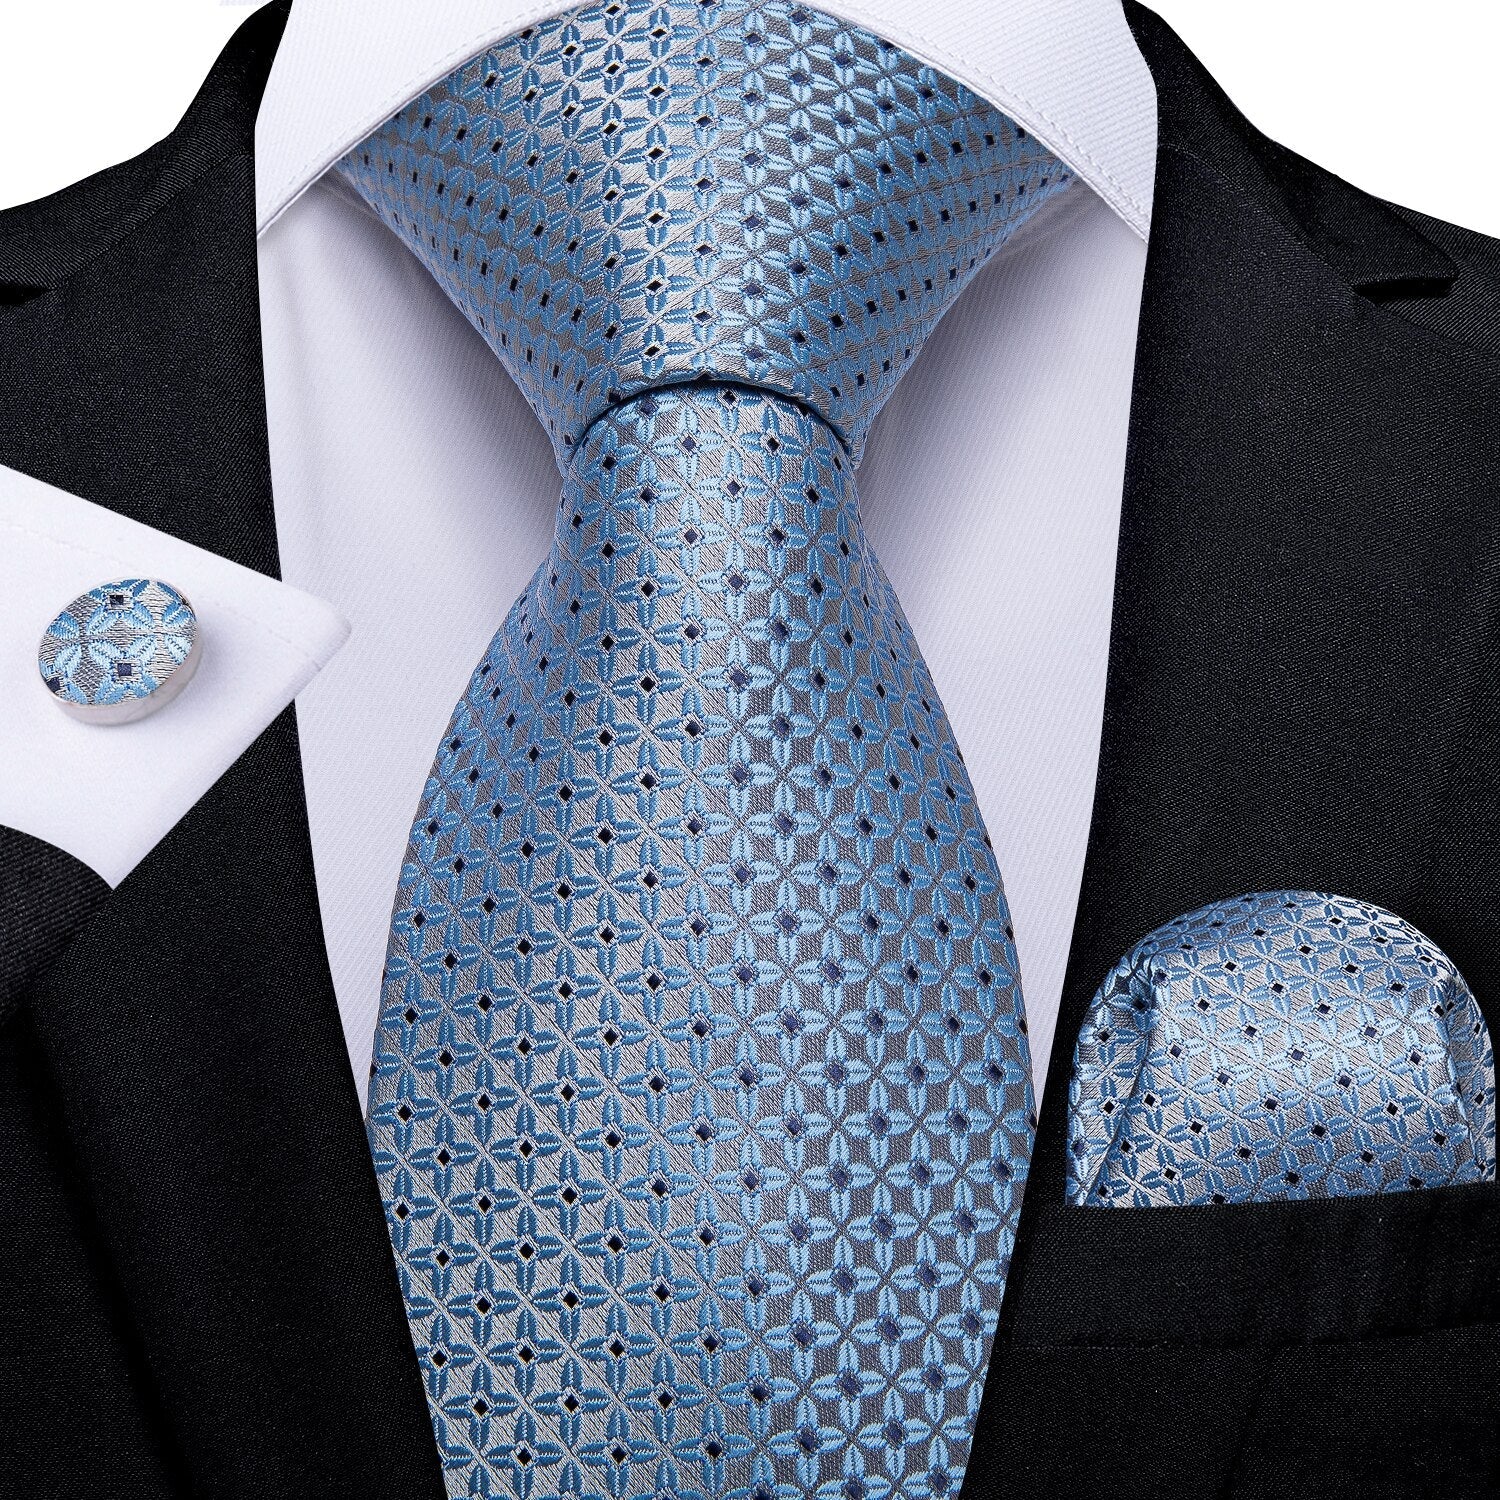 Silberne Krawatte Kariert Blau Grau